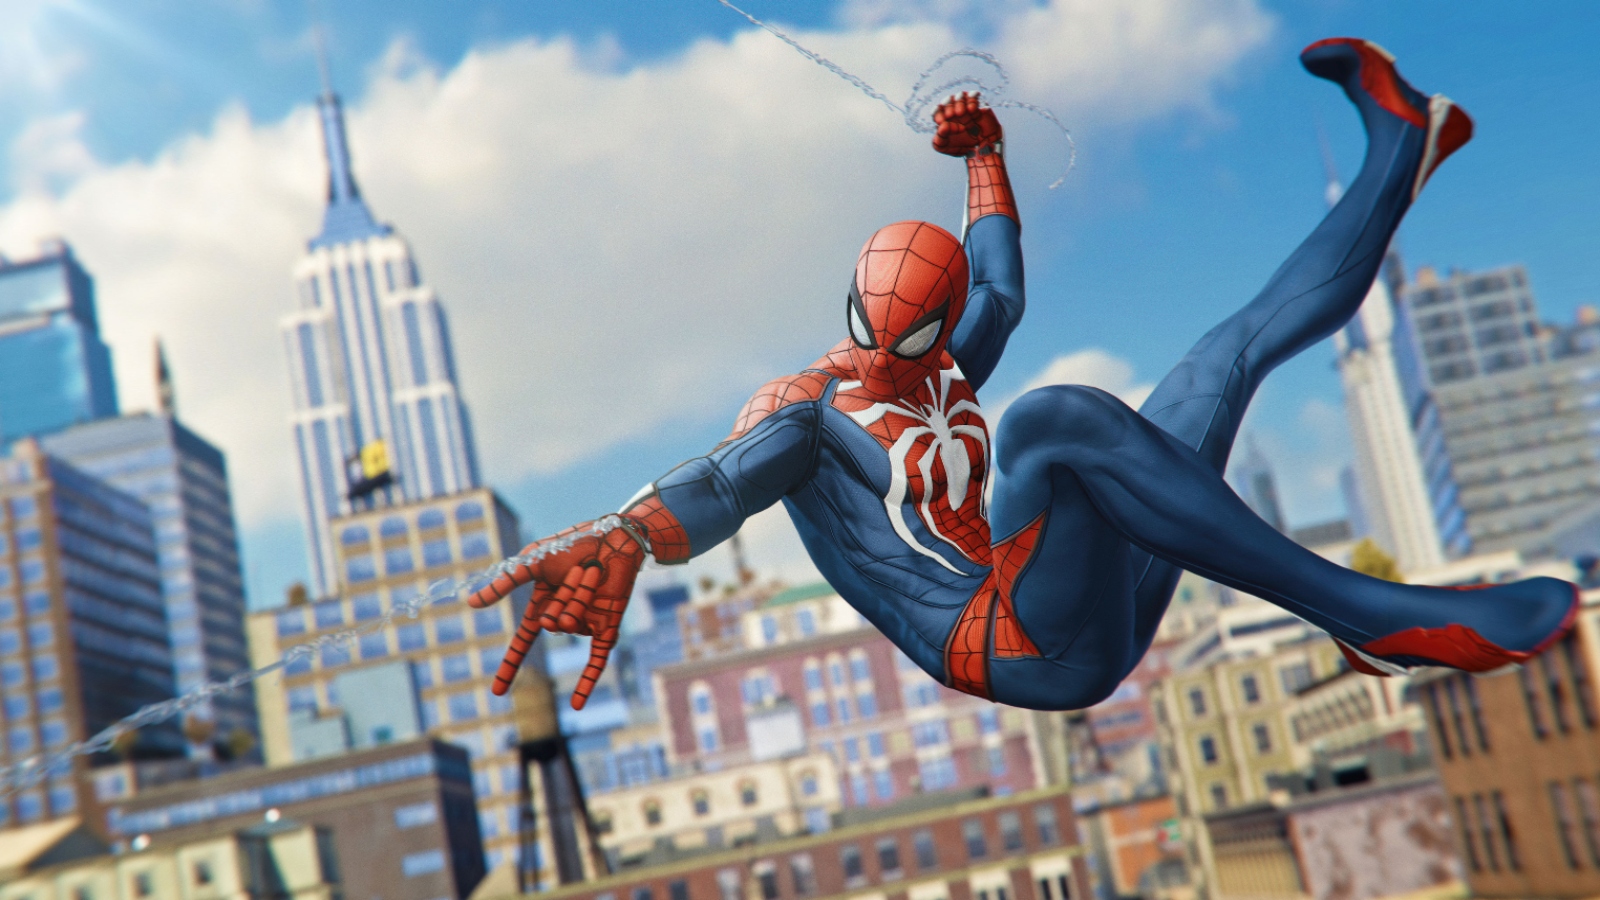 Peter Parker aka Spider-Man in Marvel's Spider-Man